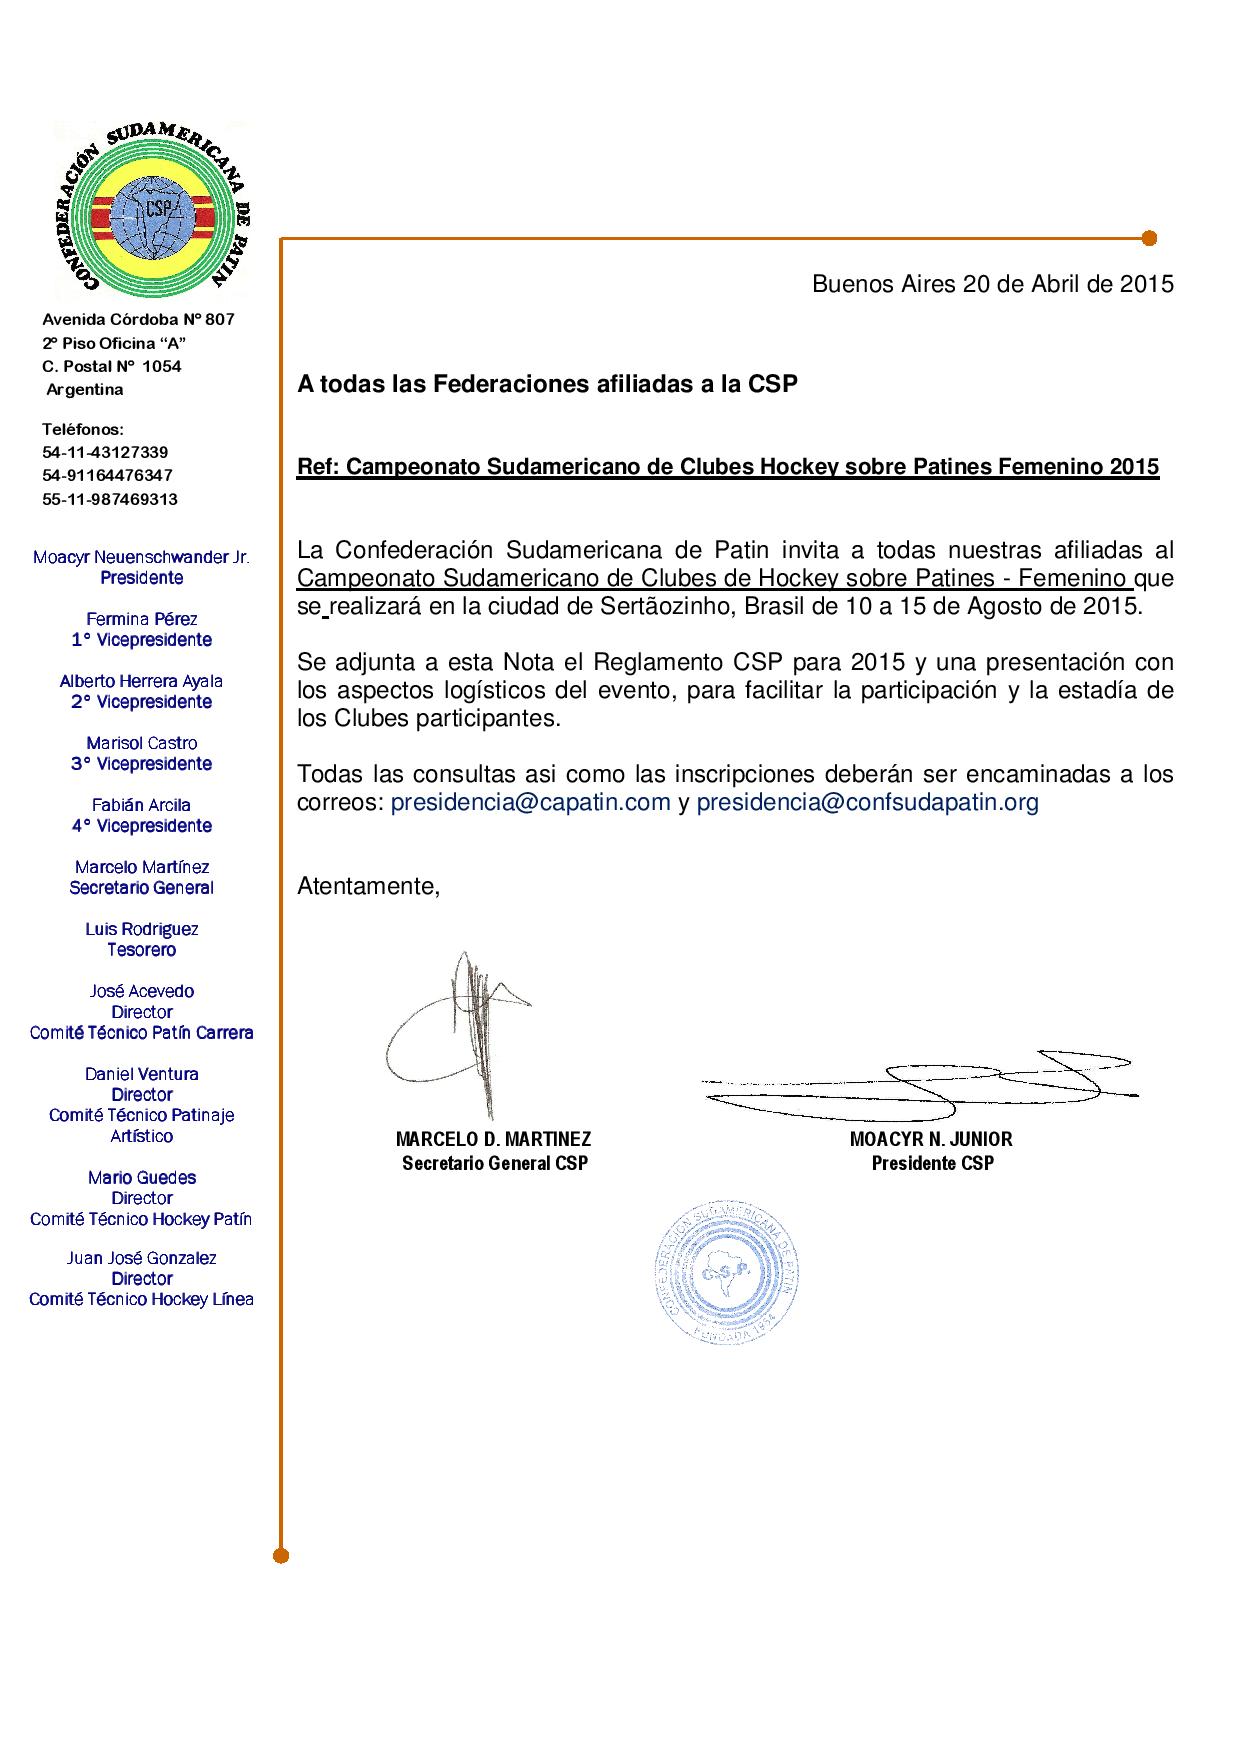 Invitacion-SudamericanoHockeyFemenino2015-page-001